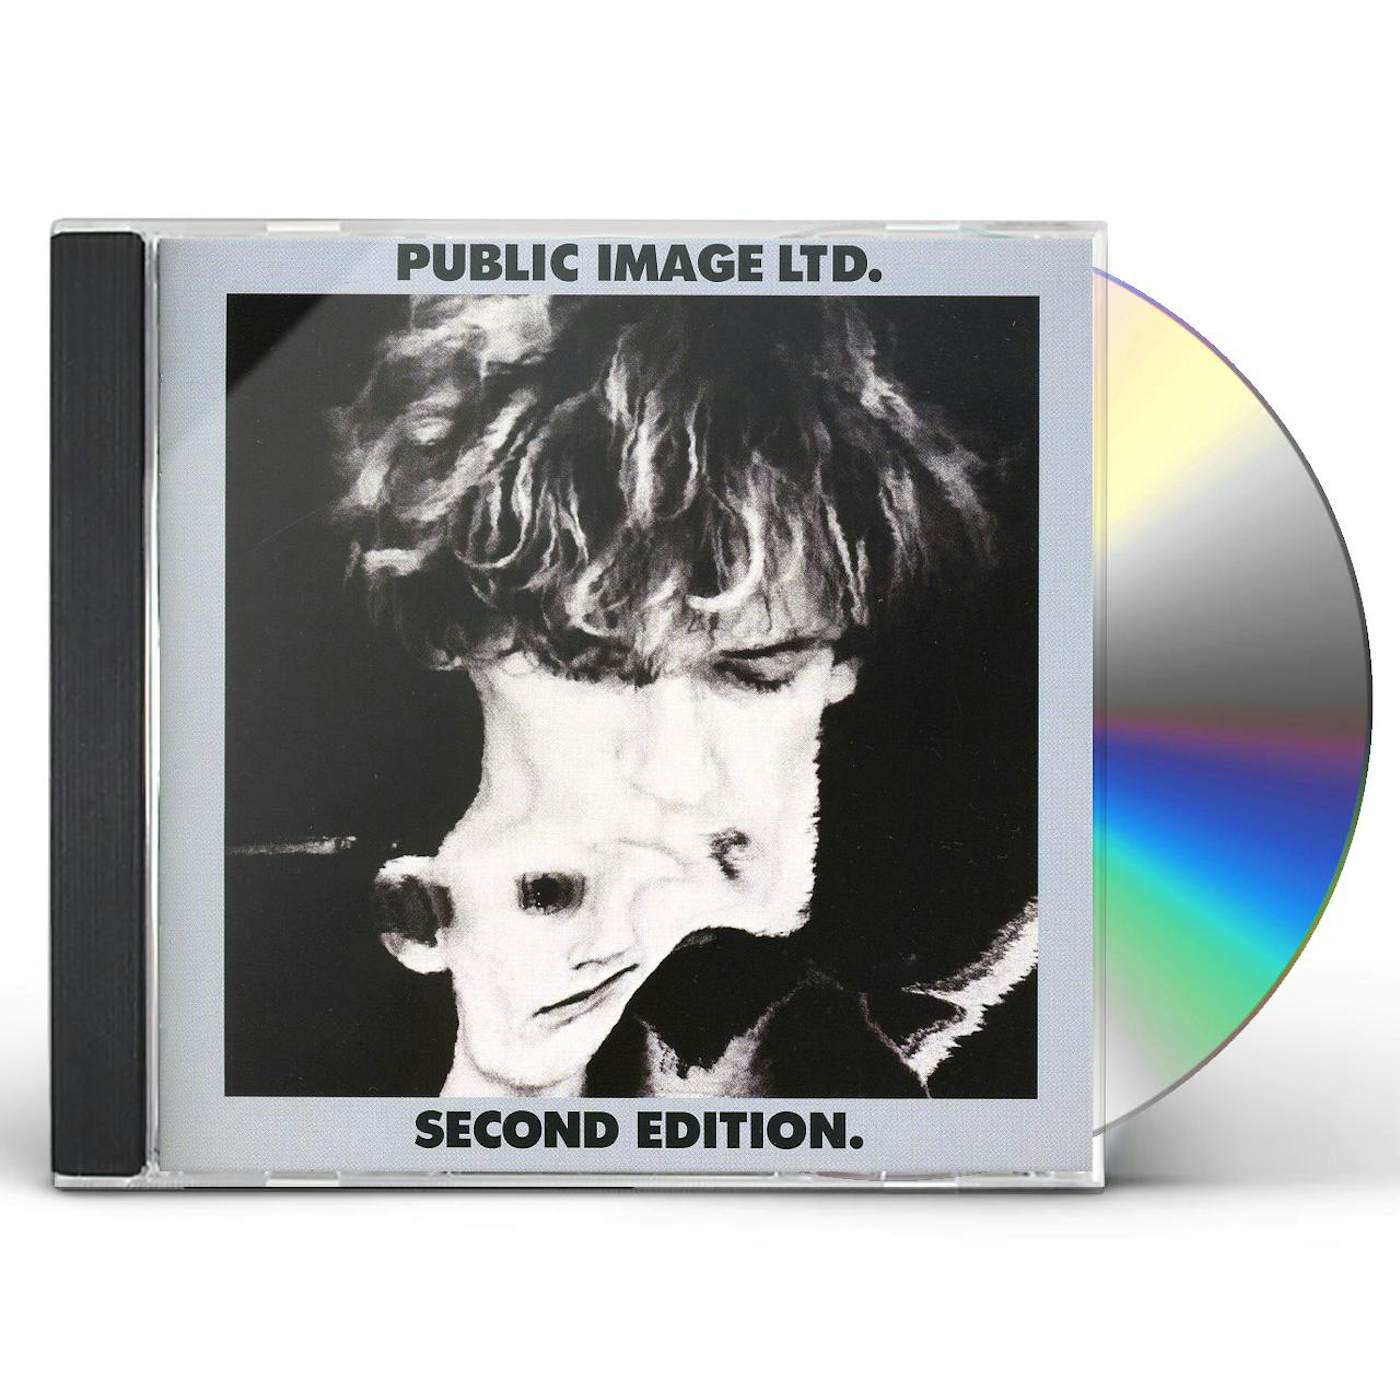 Public Image Ltd. SECOND EDITION CD